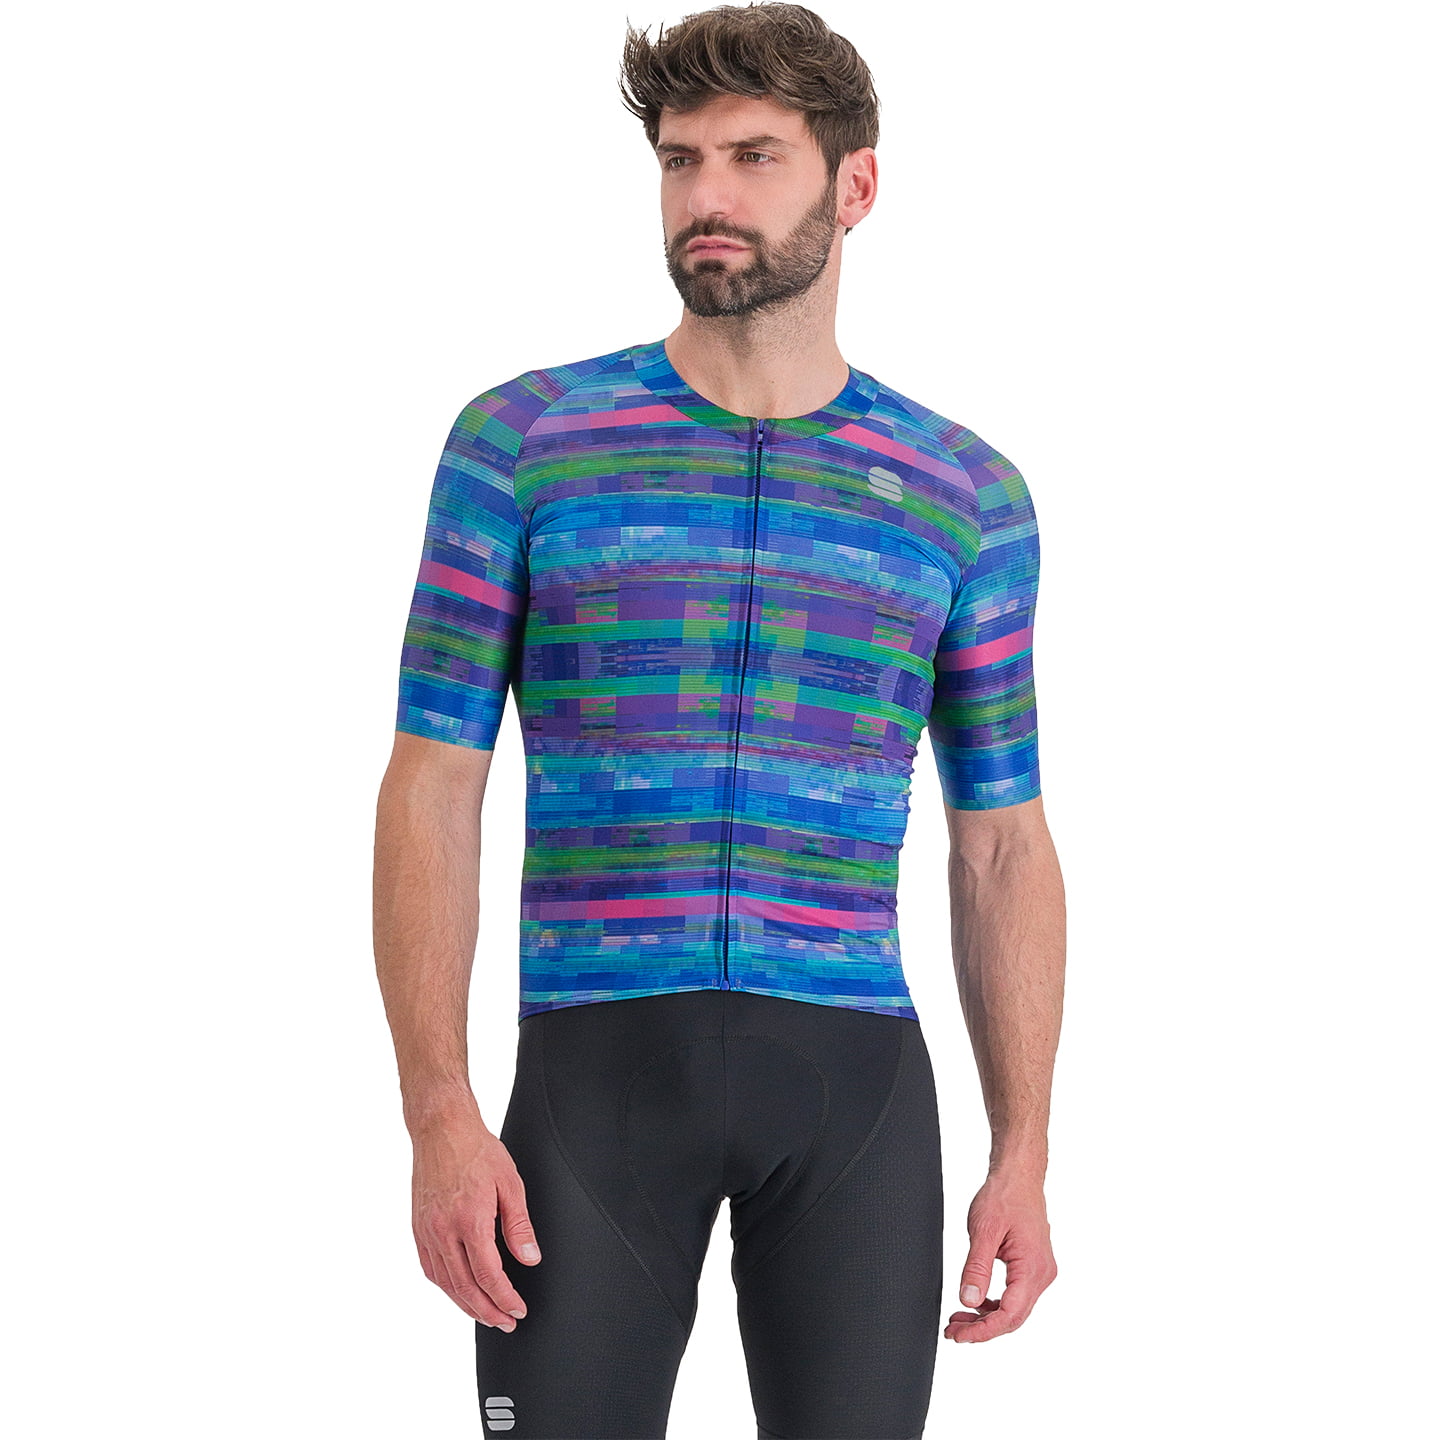 SPORTFUL Glitch Bomber Short Sleeve Jersey Short Sleeve Jersey, for men, size M, Cycling jersey, Cycling clothing